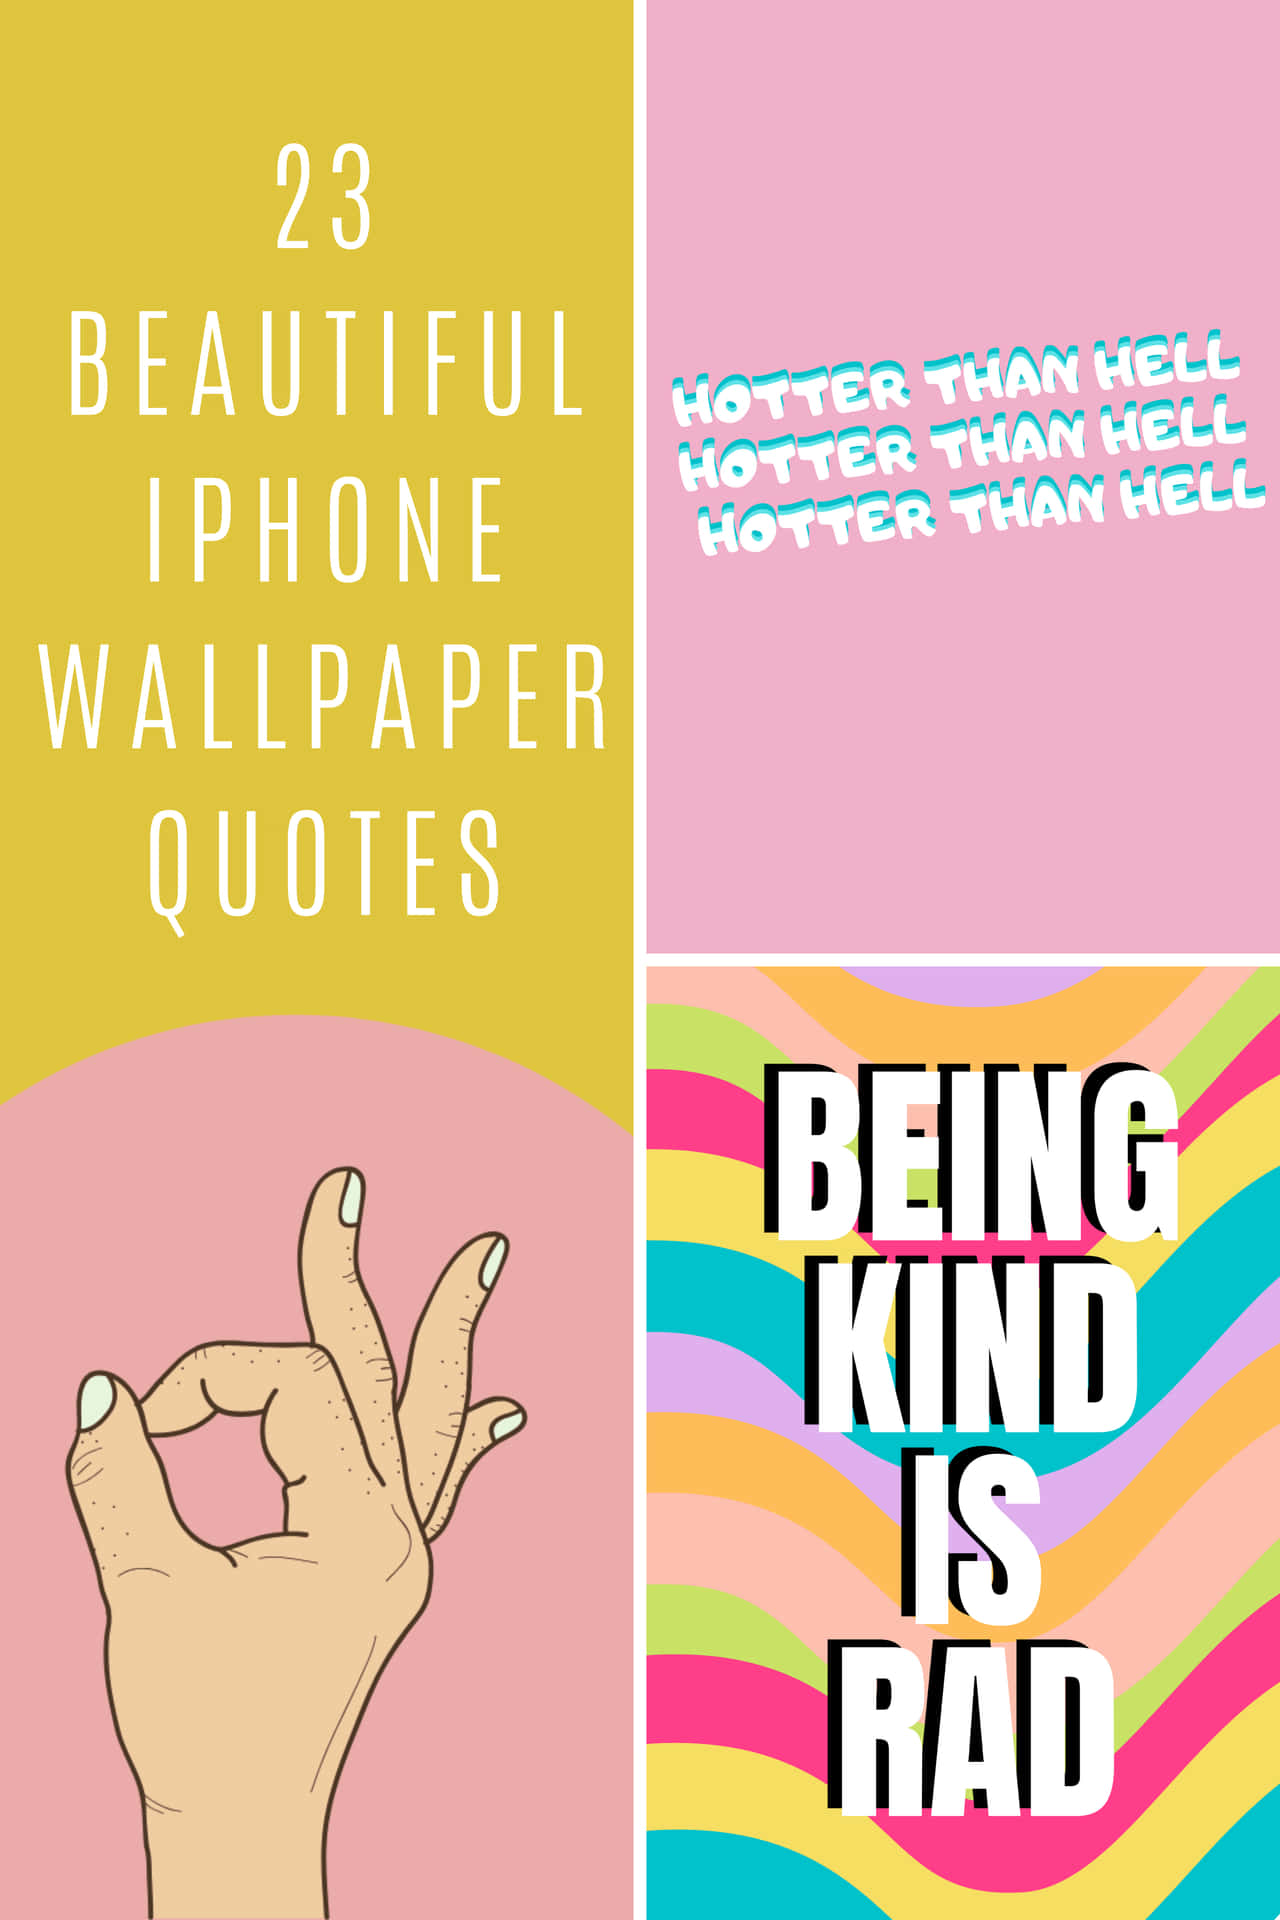 Spread Kindness Wallpaper